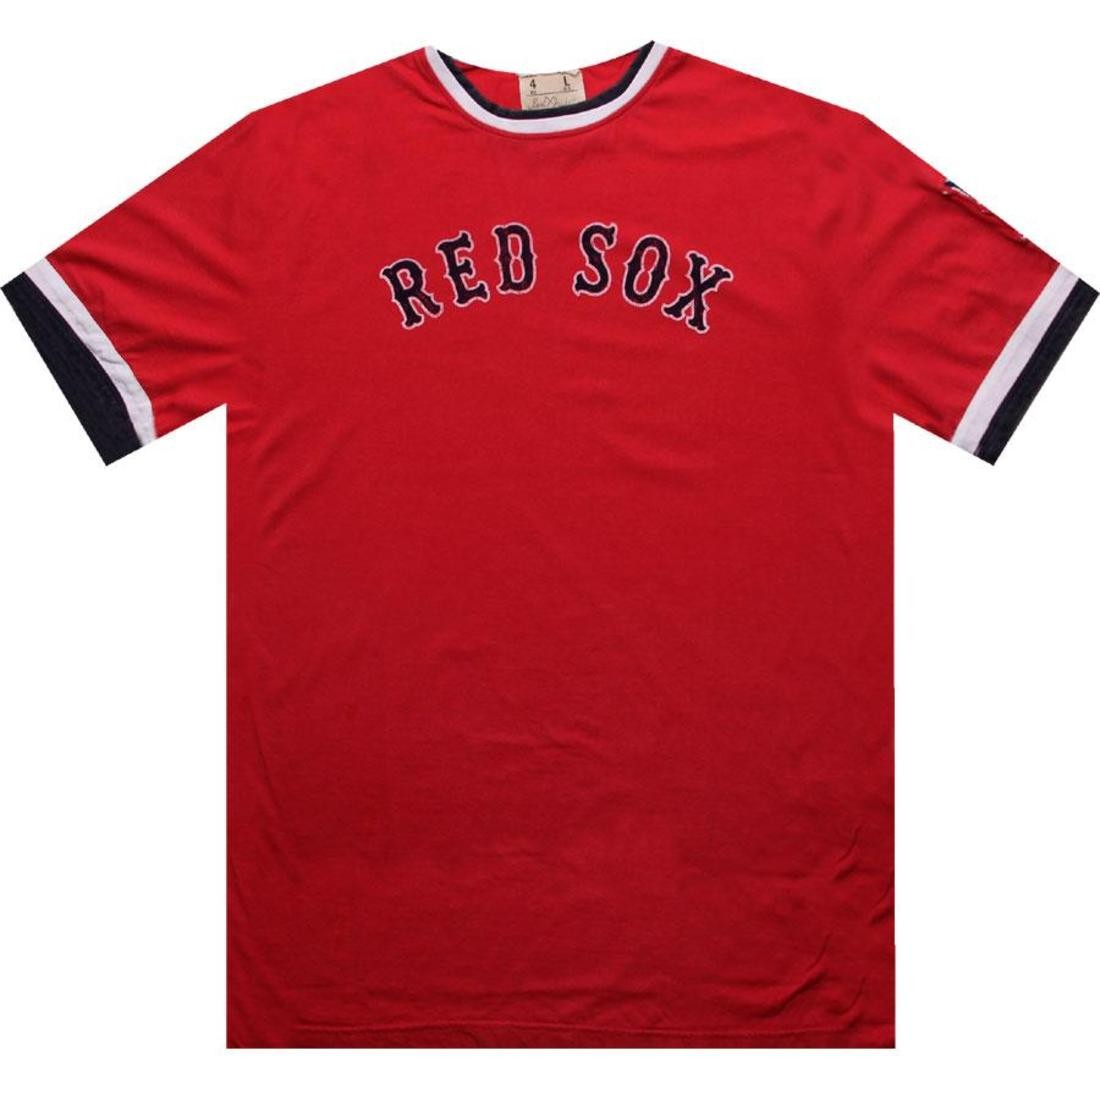 red sox tee shirt